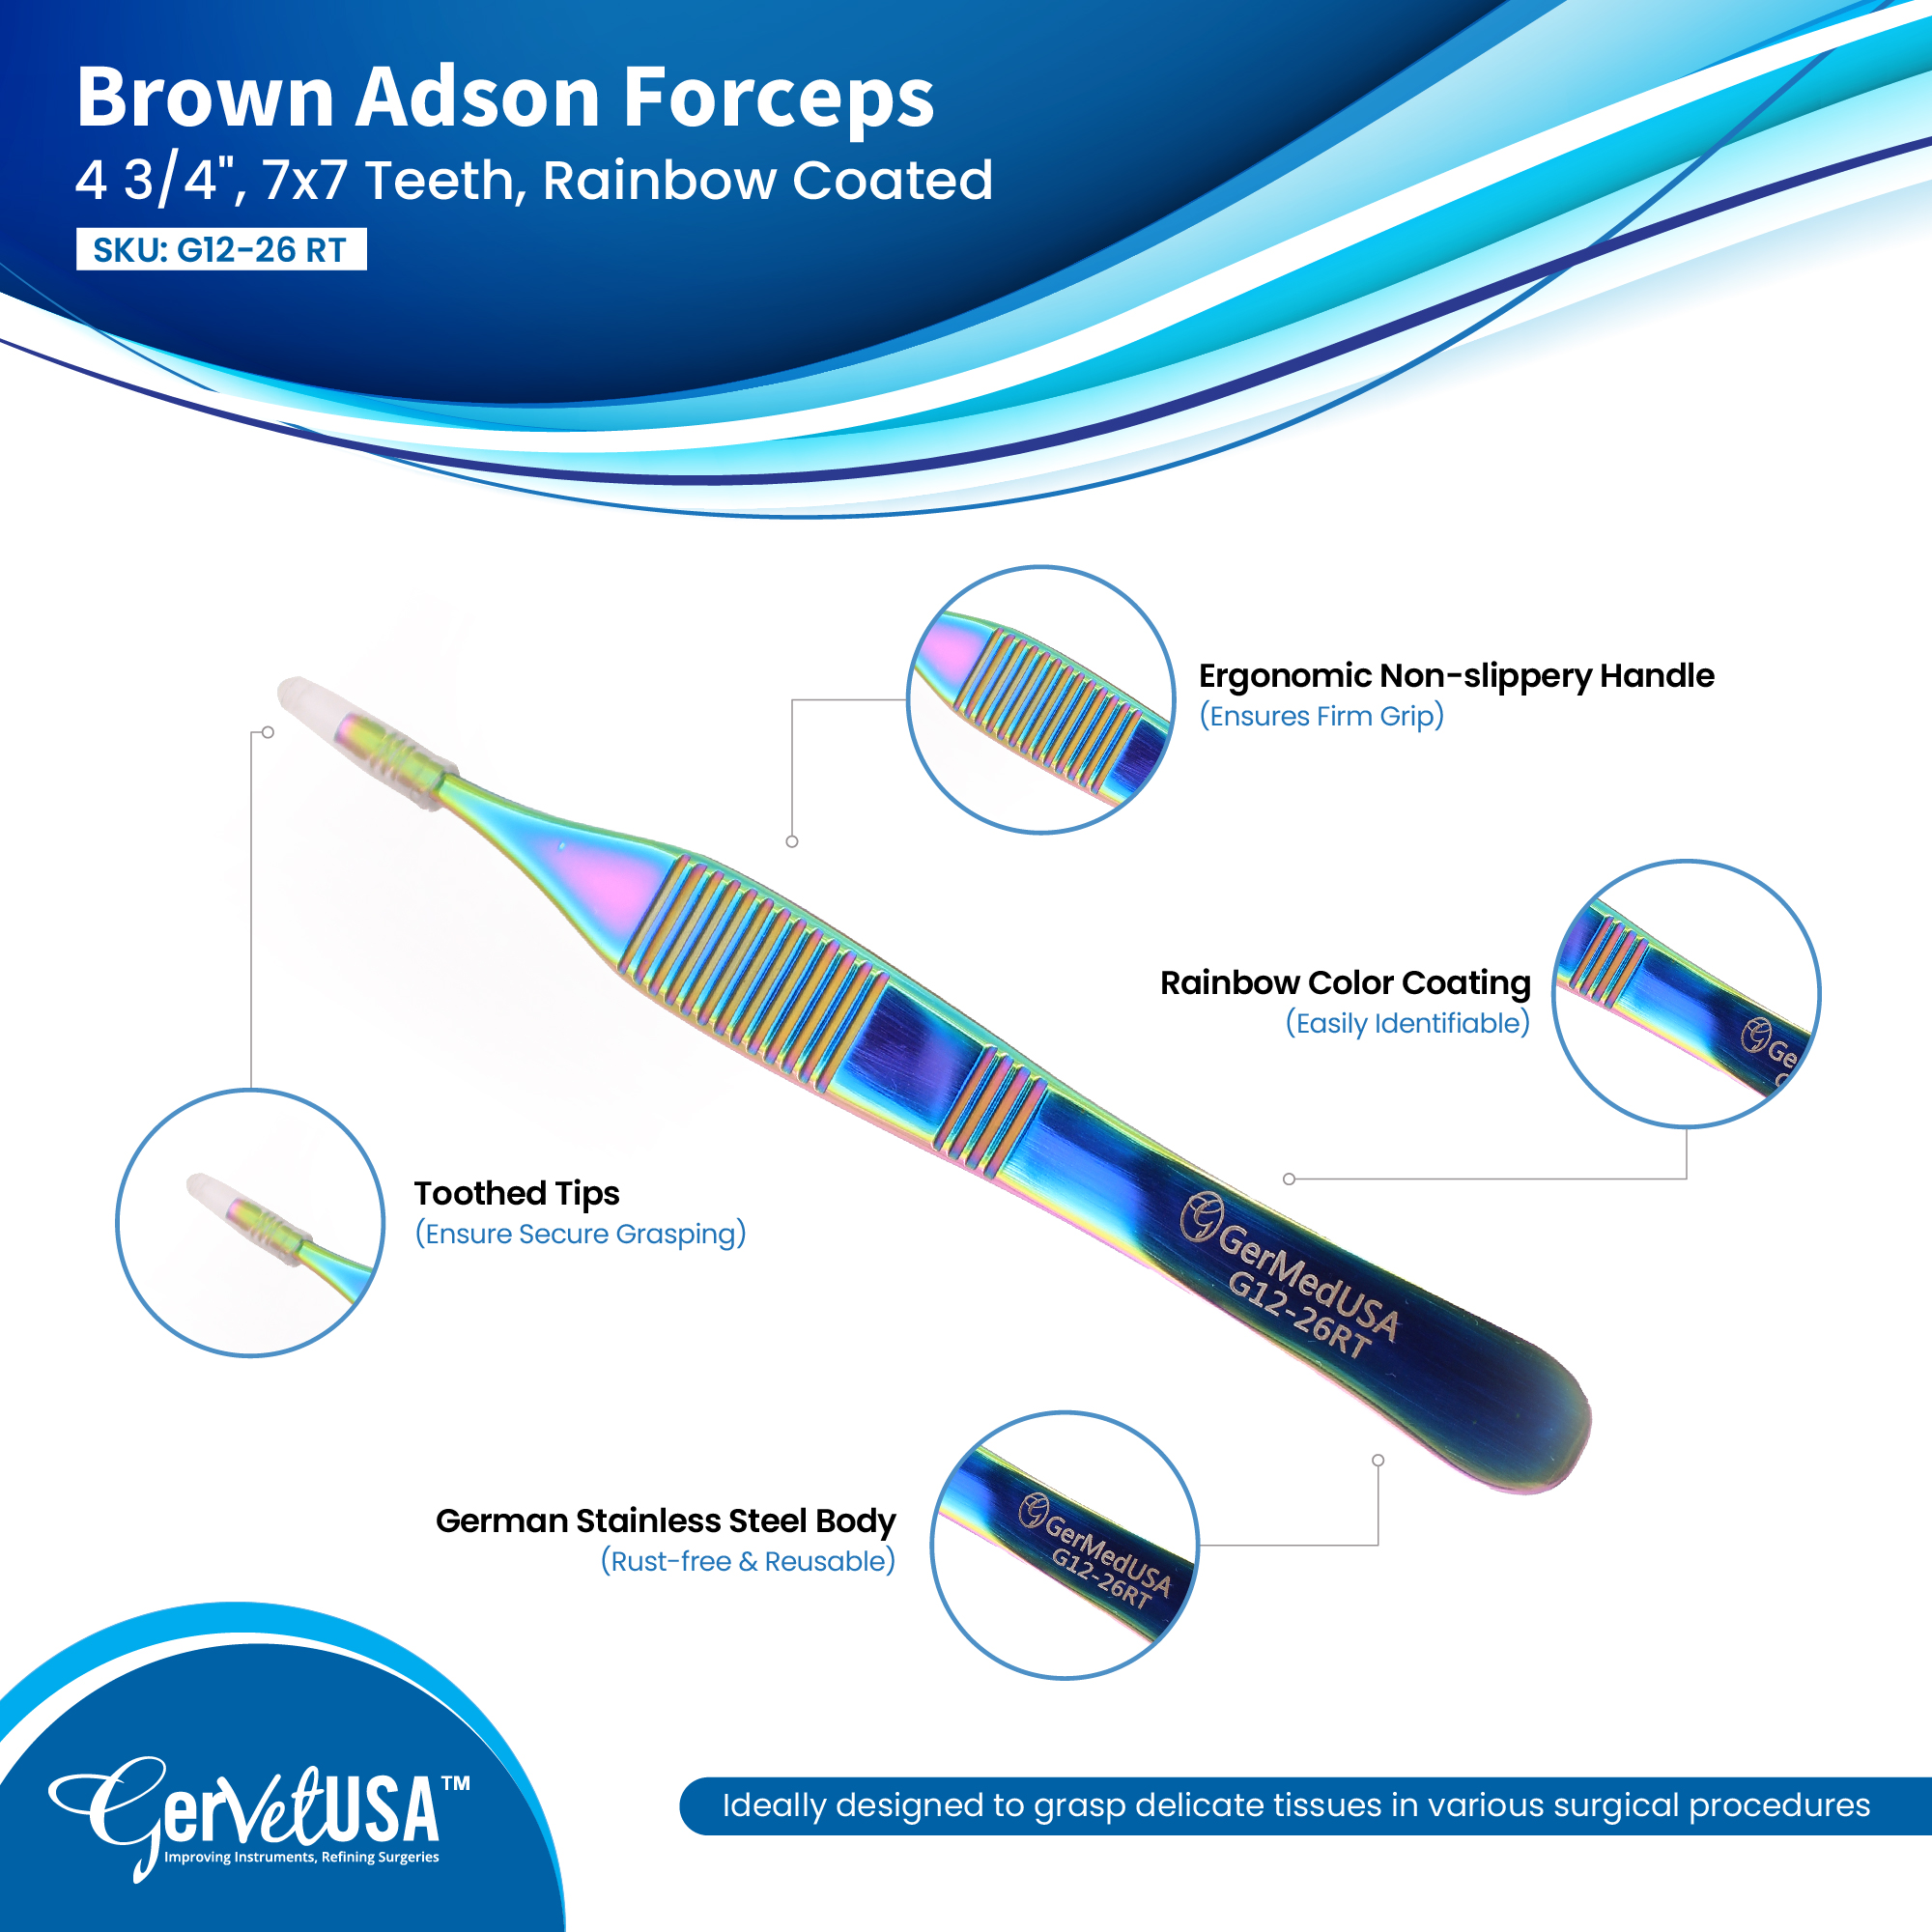 Brown Adson Forceps 4 3/4", 7x7 Teeth, Rainbow Coated